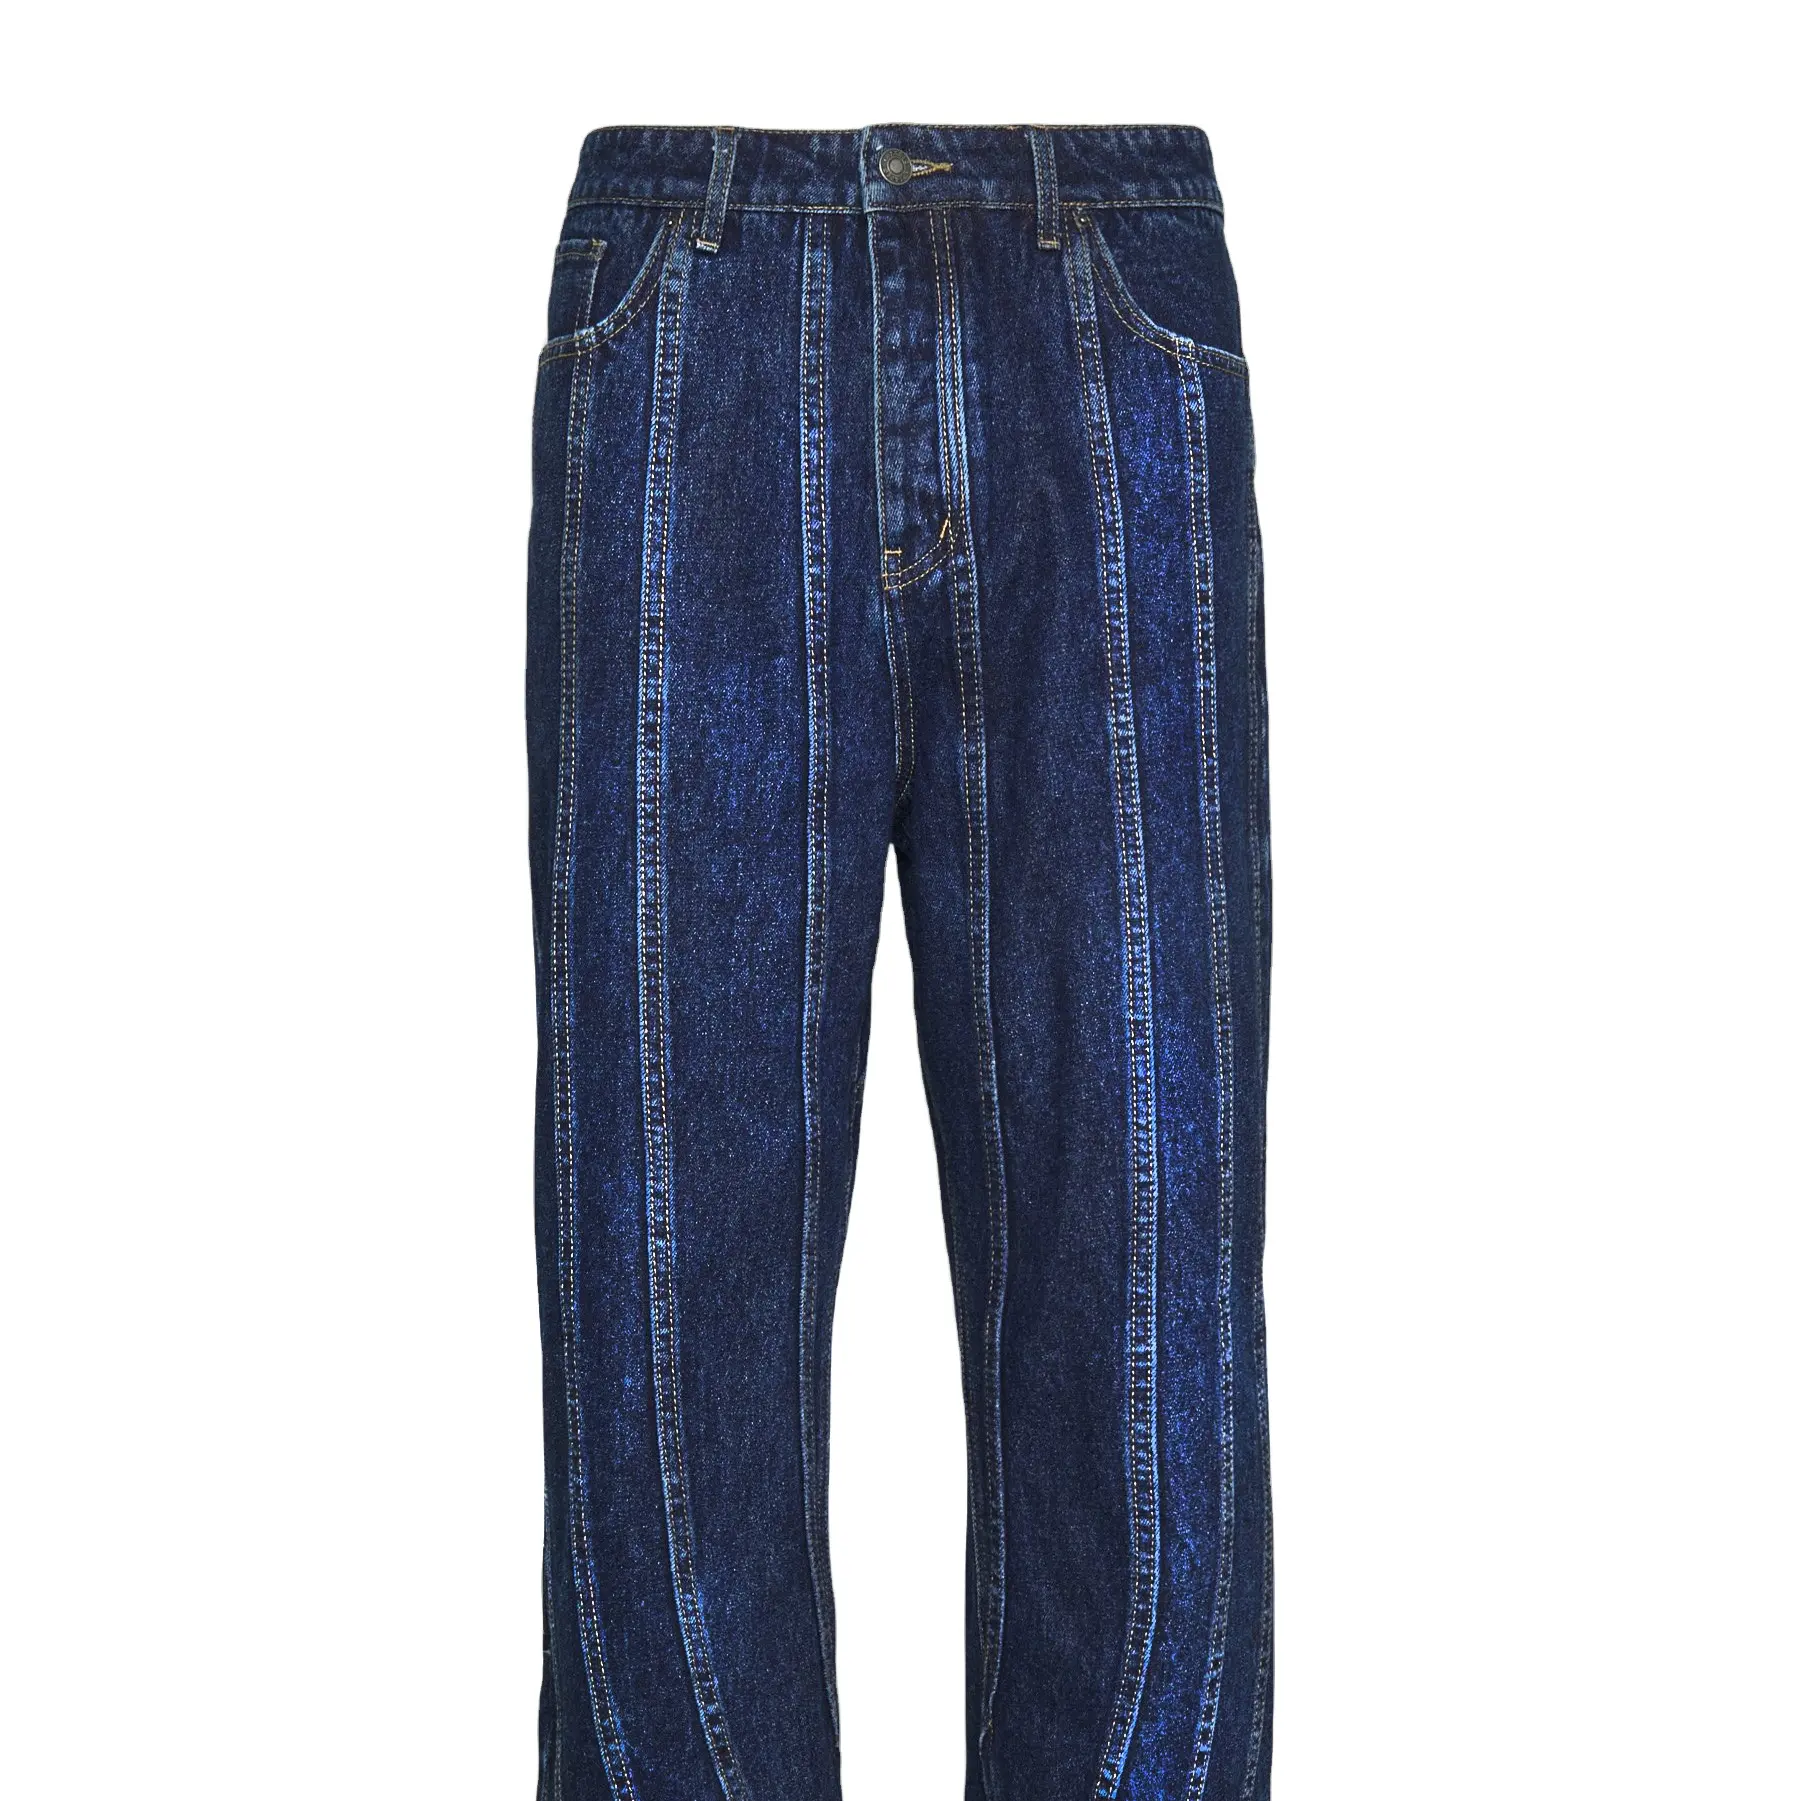 Benutzer definierte Männer Street Style Naht Relaxed Fit Plus Size Baggy Jeans Hosen Denim Flared Selvedge Jeans